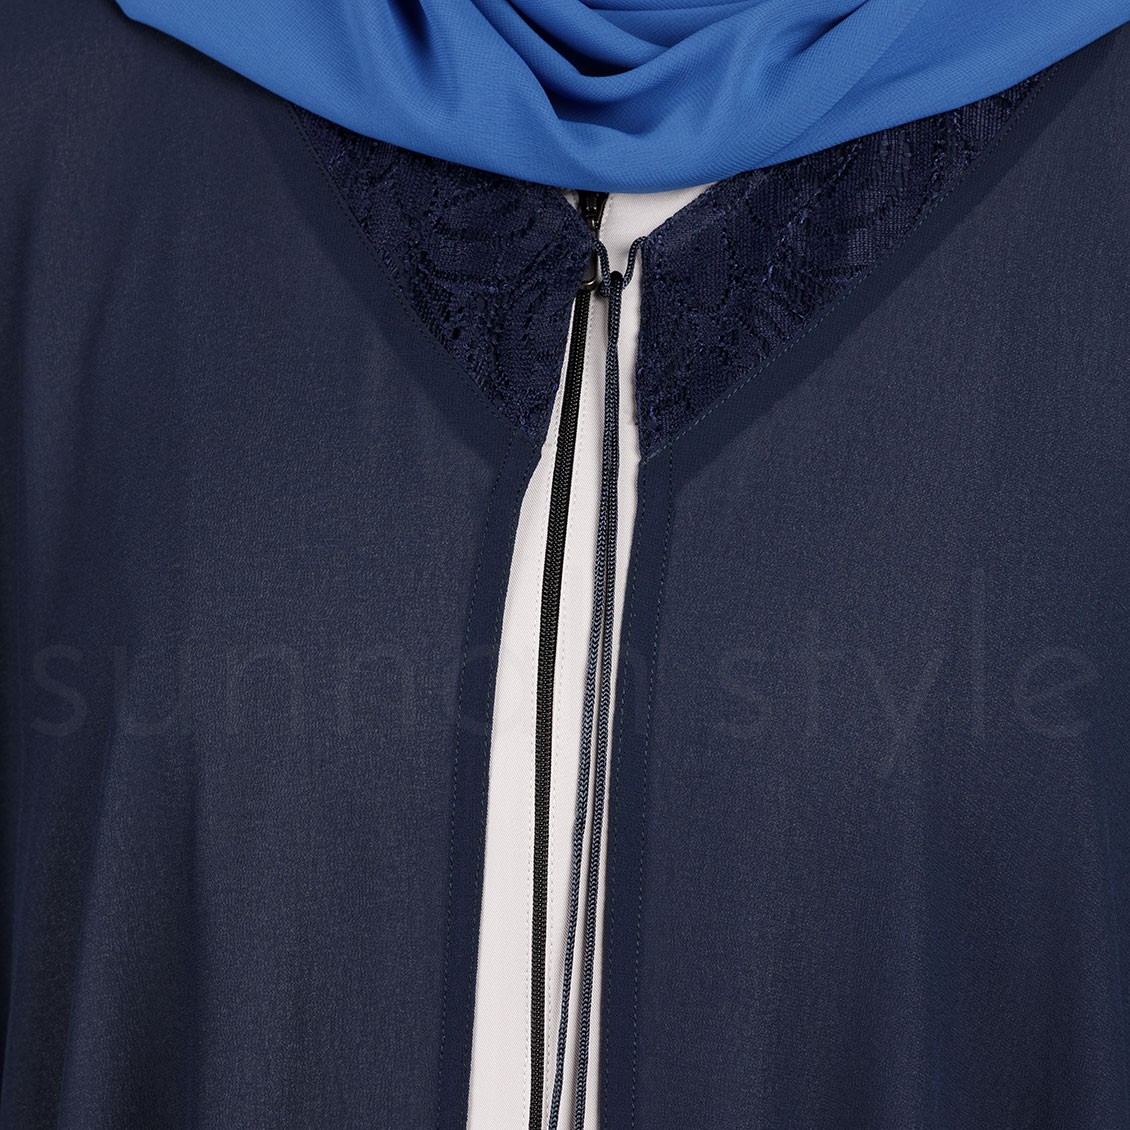 Sunnah Style Shadow Chiffon Robe Navy Blue